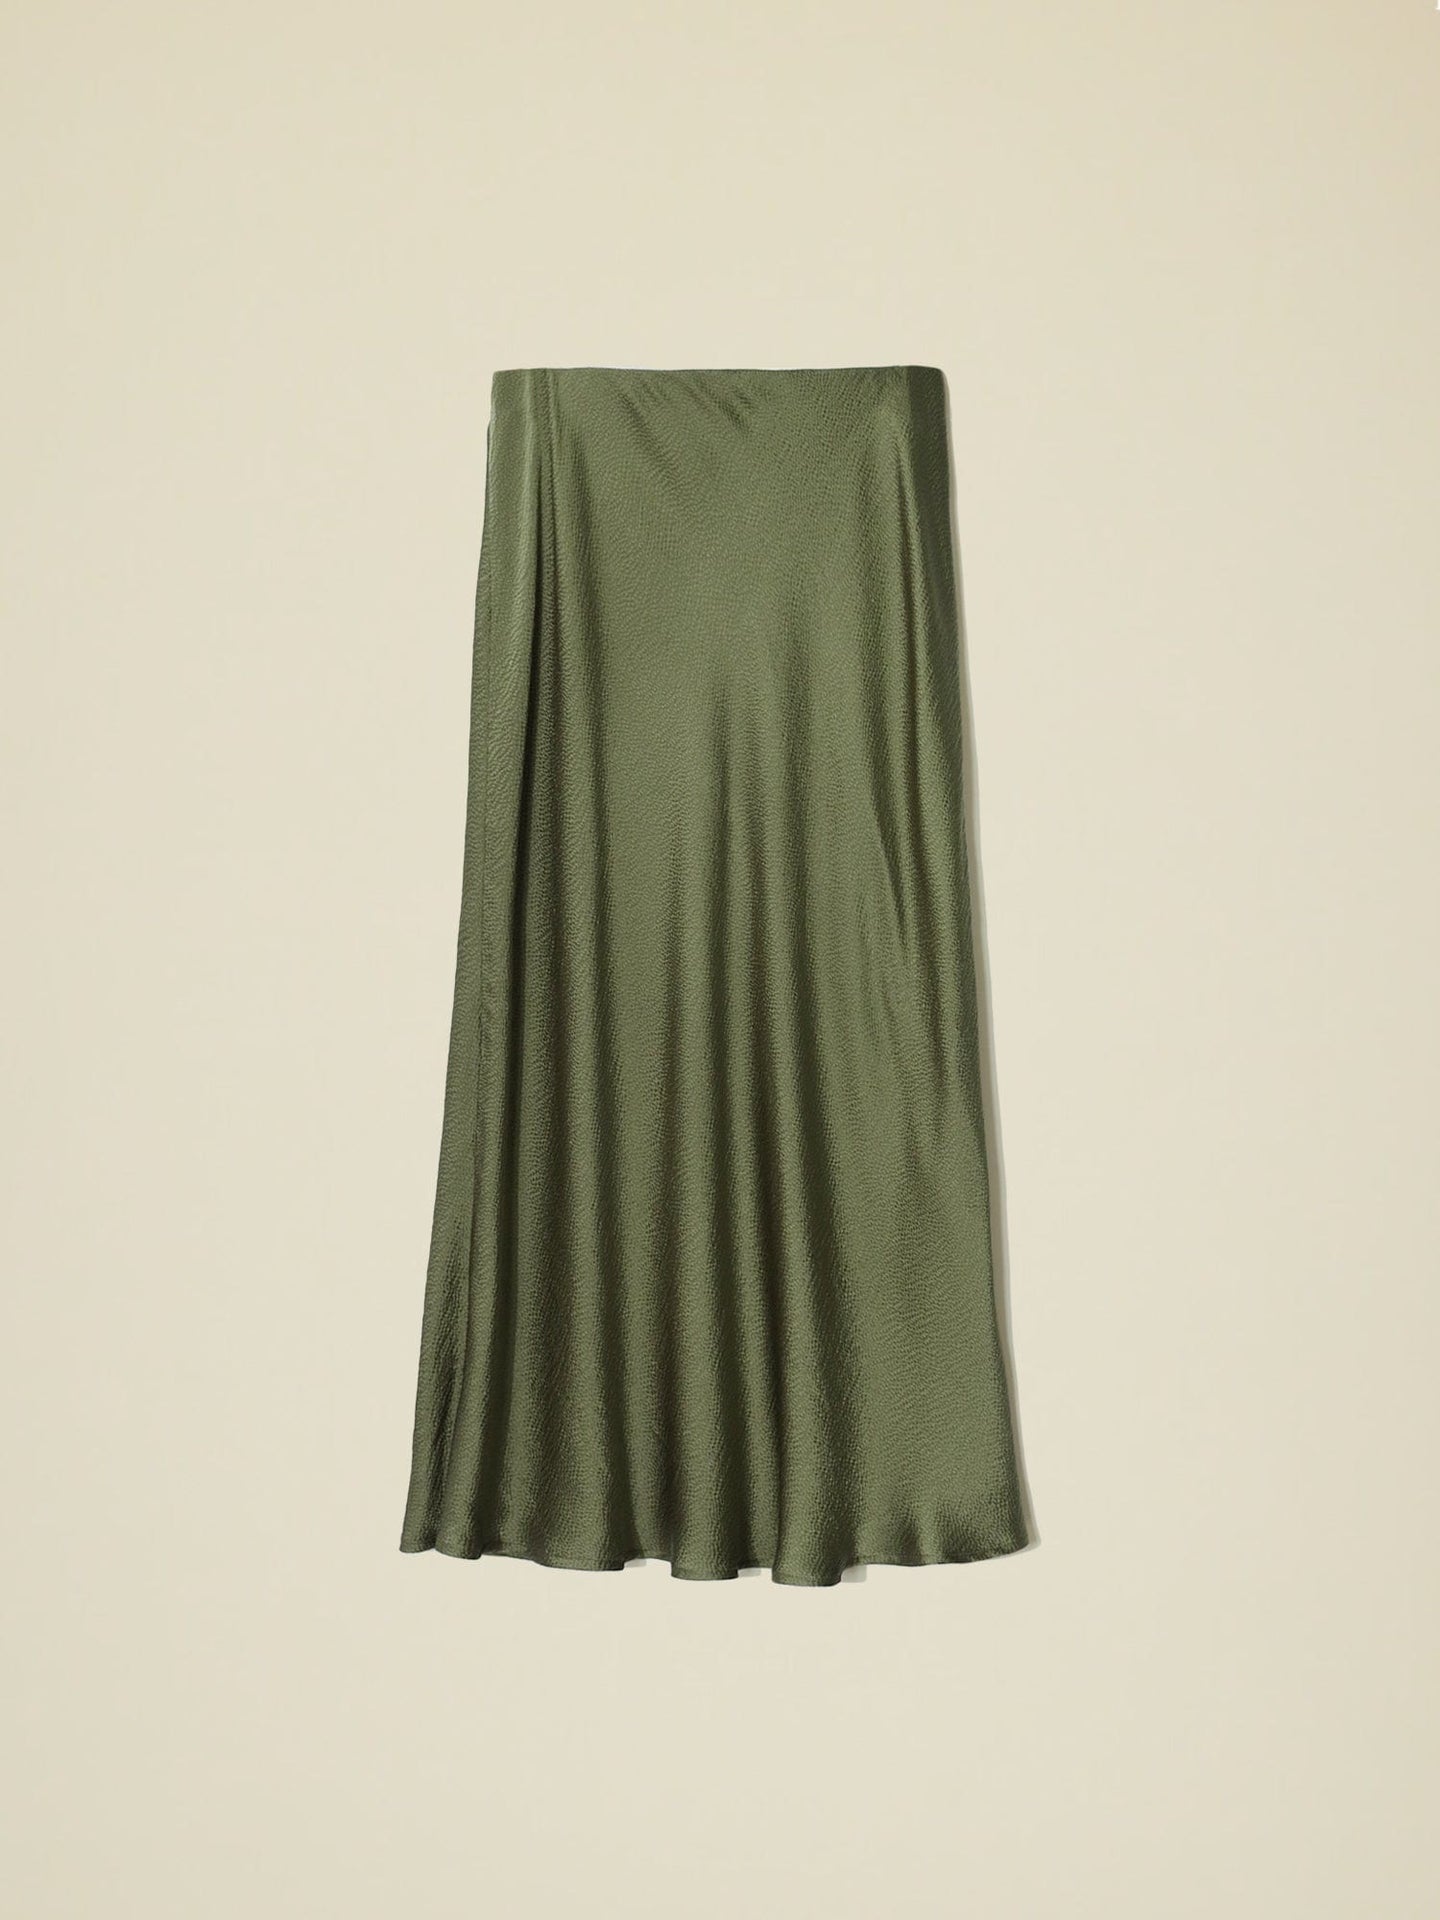 Xirena Skirt Serpentine Audrina Skirt